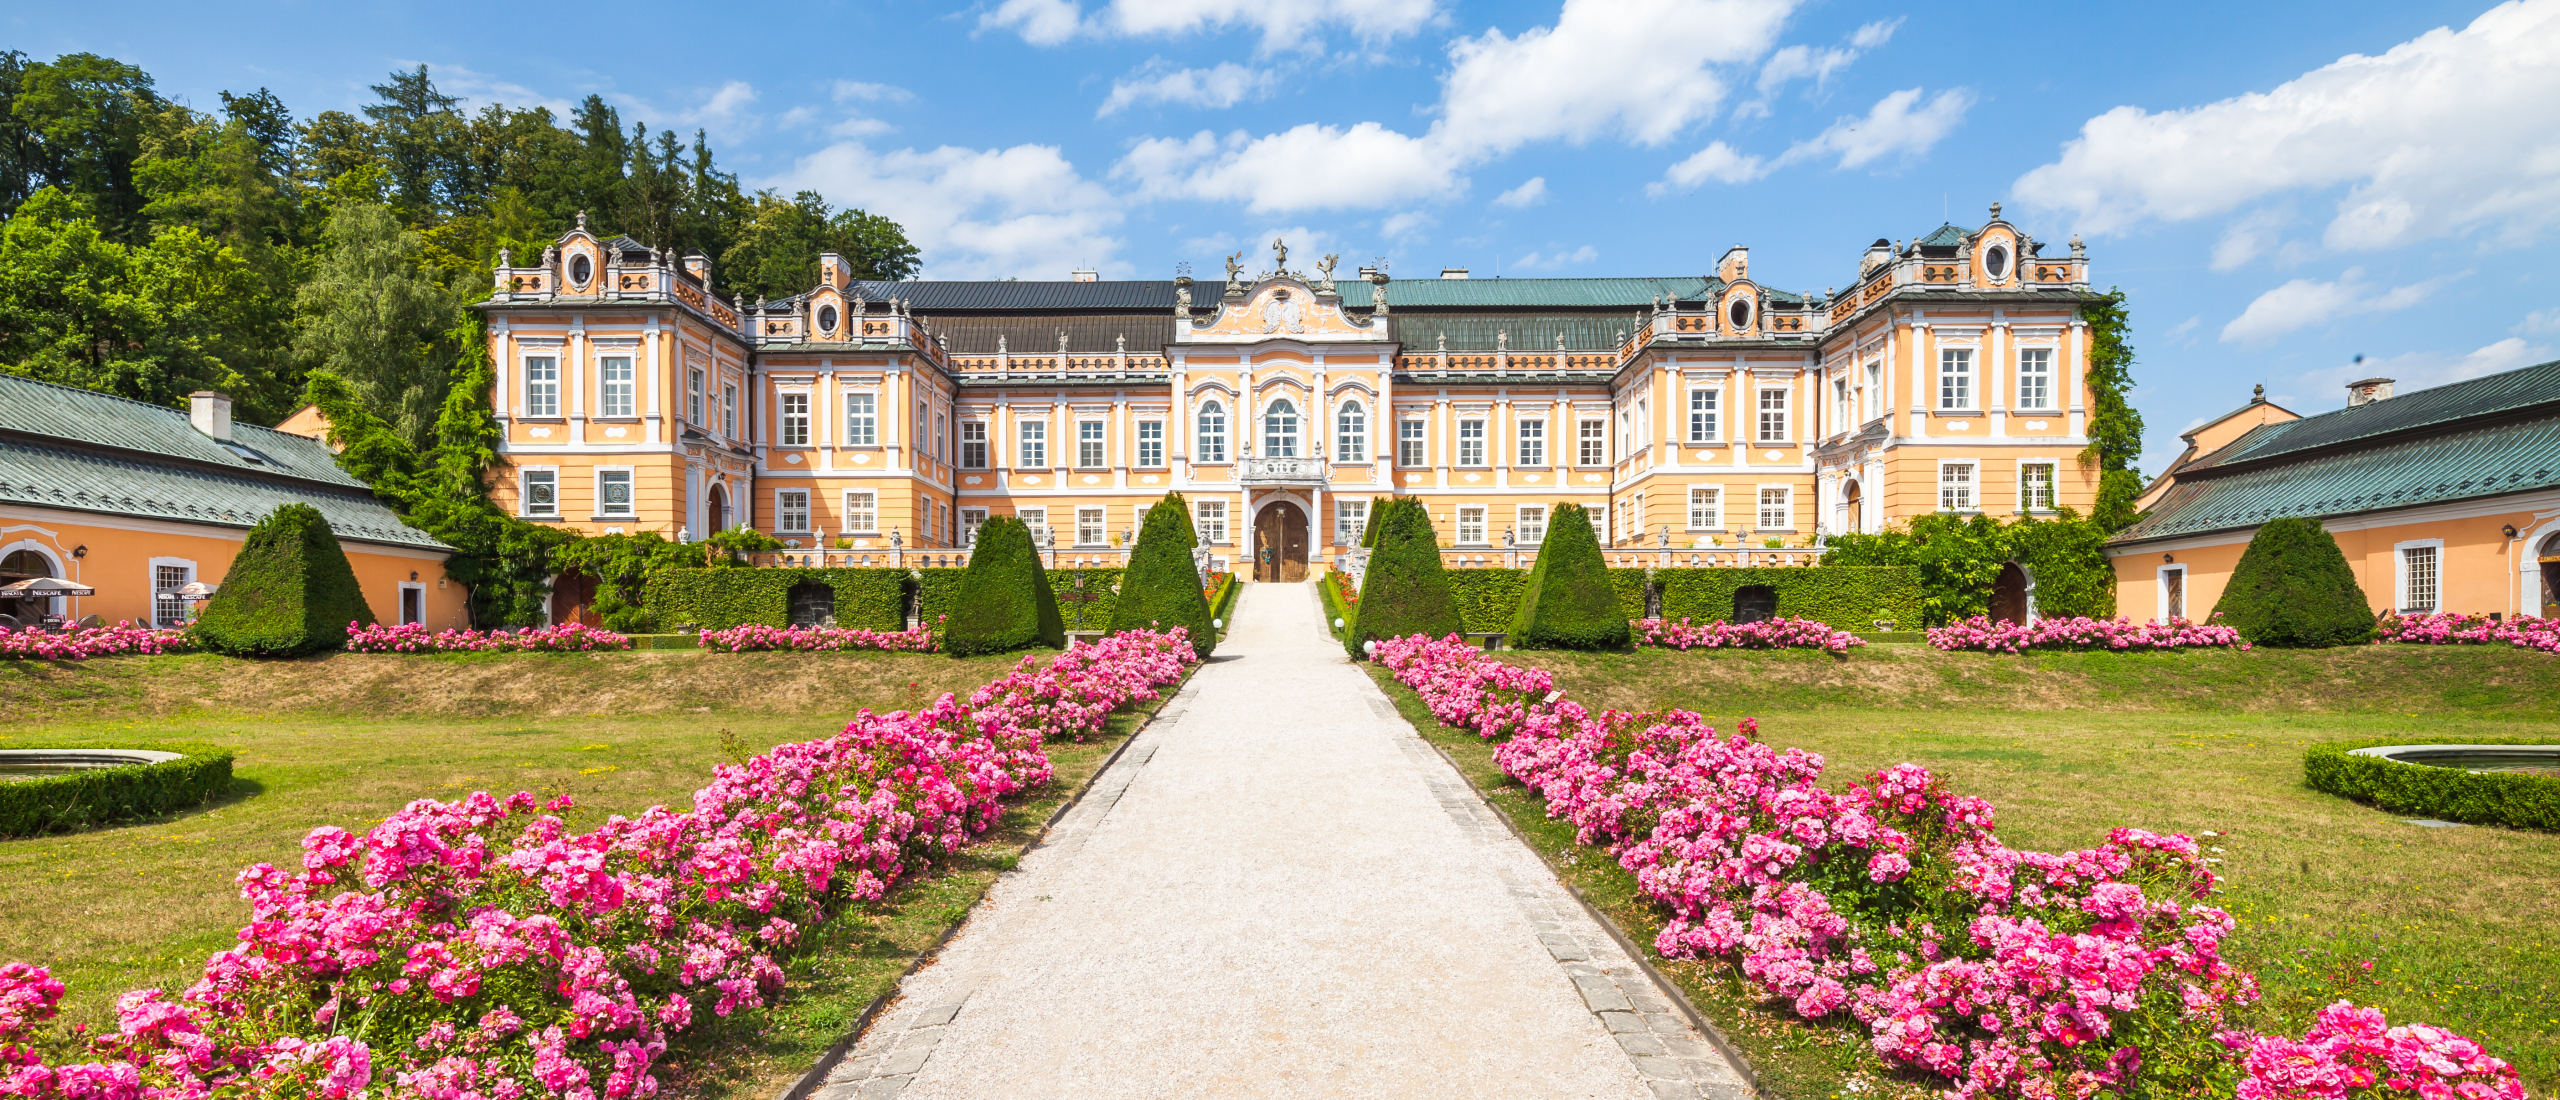 De mooiste kasteeltuinen van Tsjechië